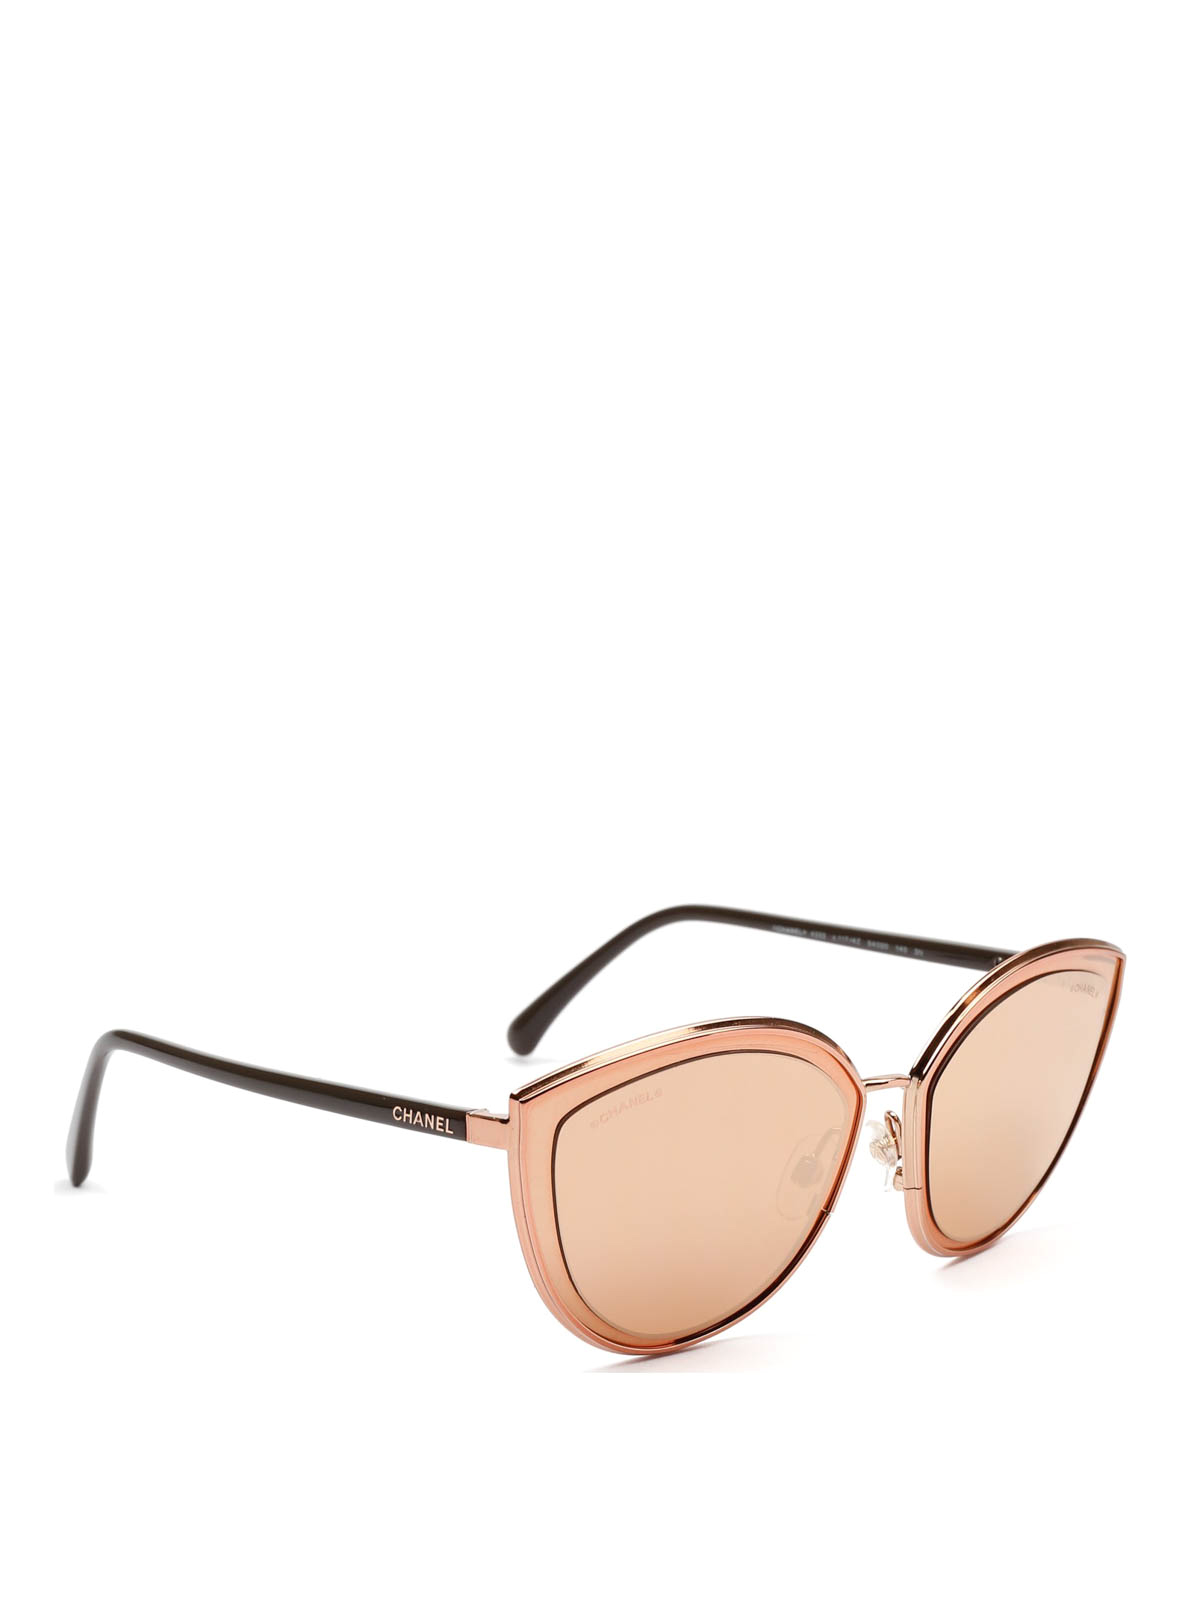 Sunglasses Chanel - Pink gold cat eye sunglasses - 4222C1174Z